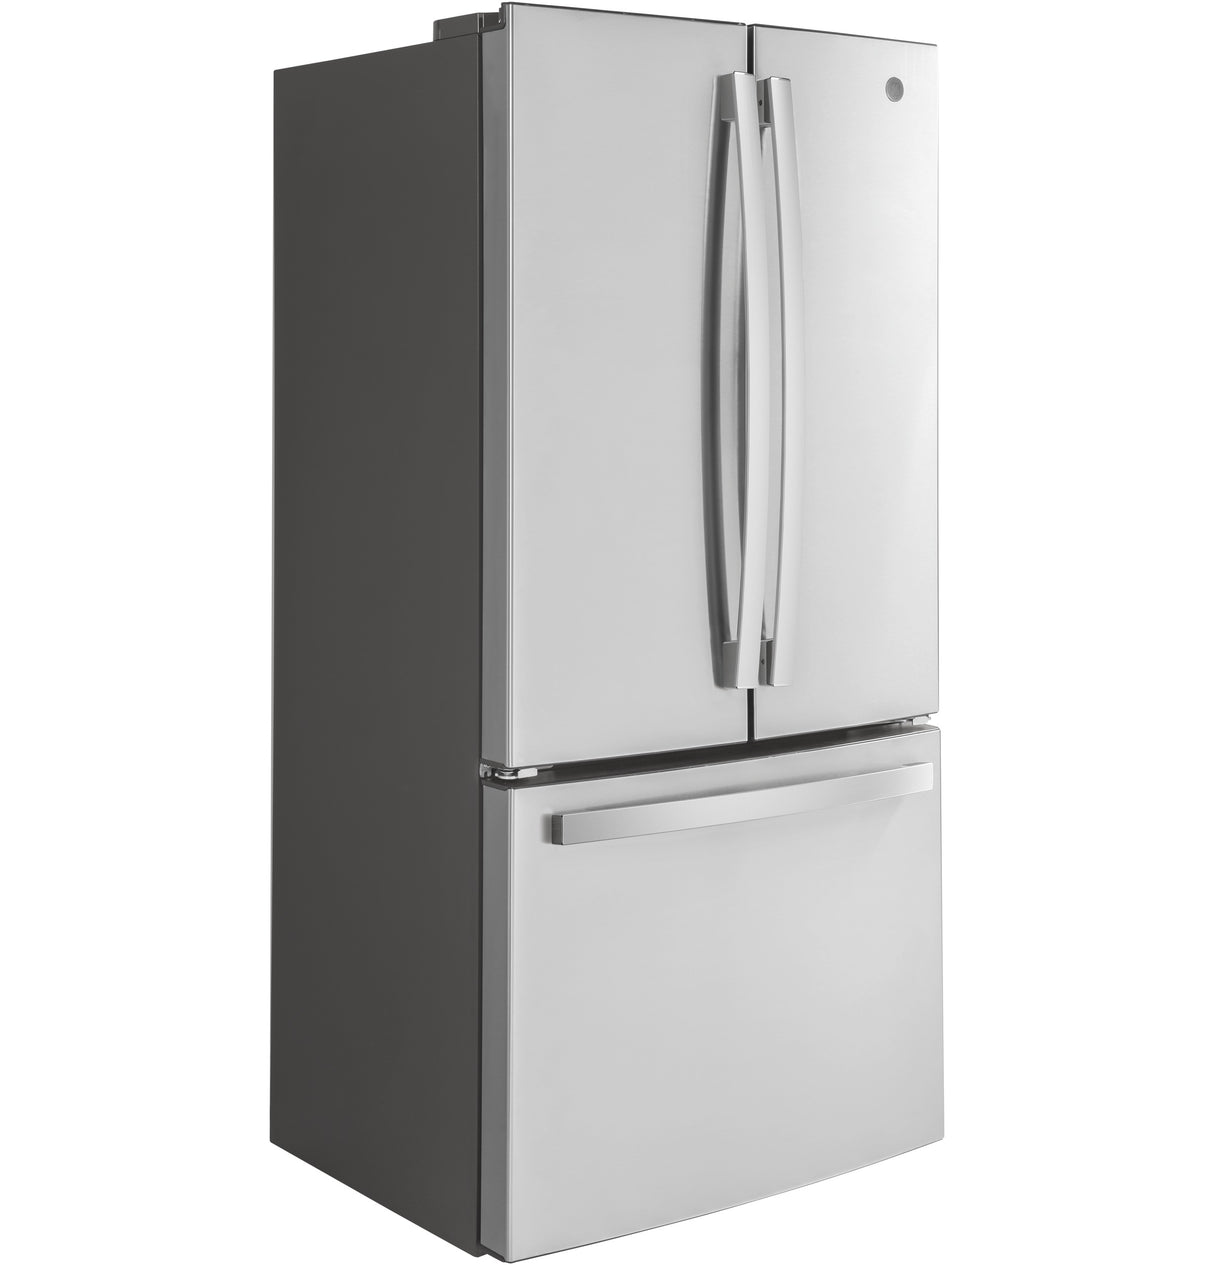 GE(R) ENERGY STAR(R) 18.6 Cu. Ft. Counter-Depth French-Door Refrigerator - (GWE19JYLFS)